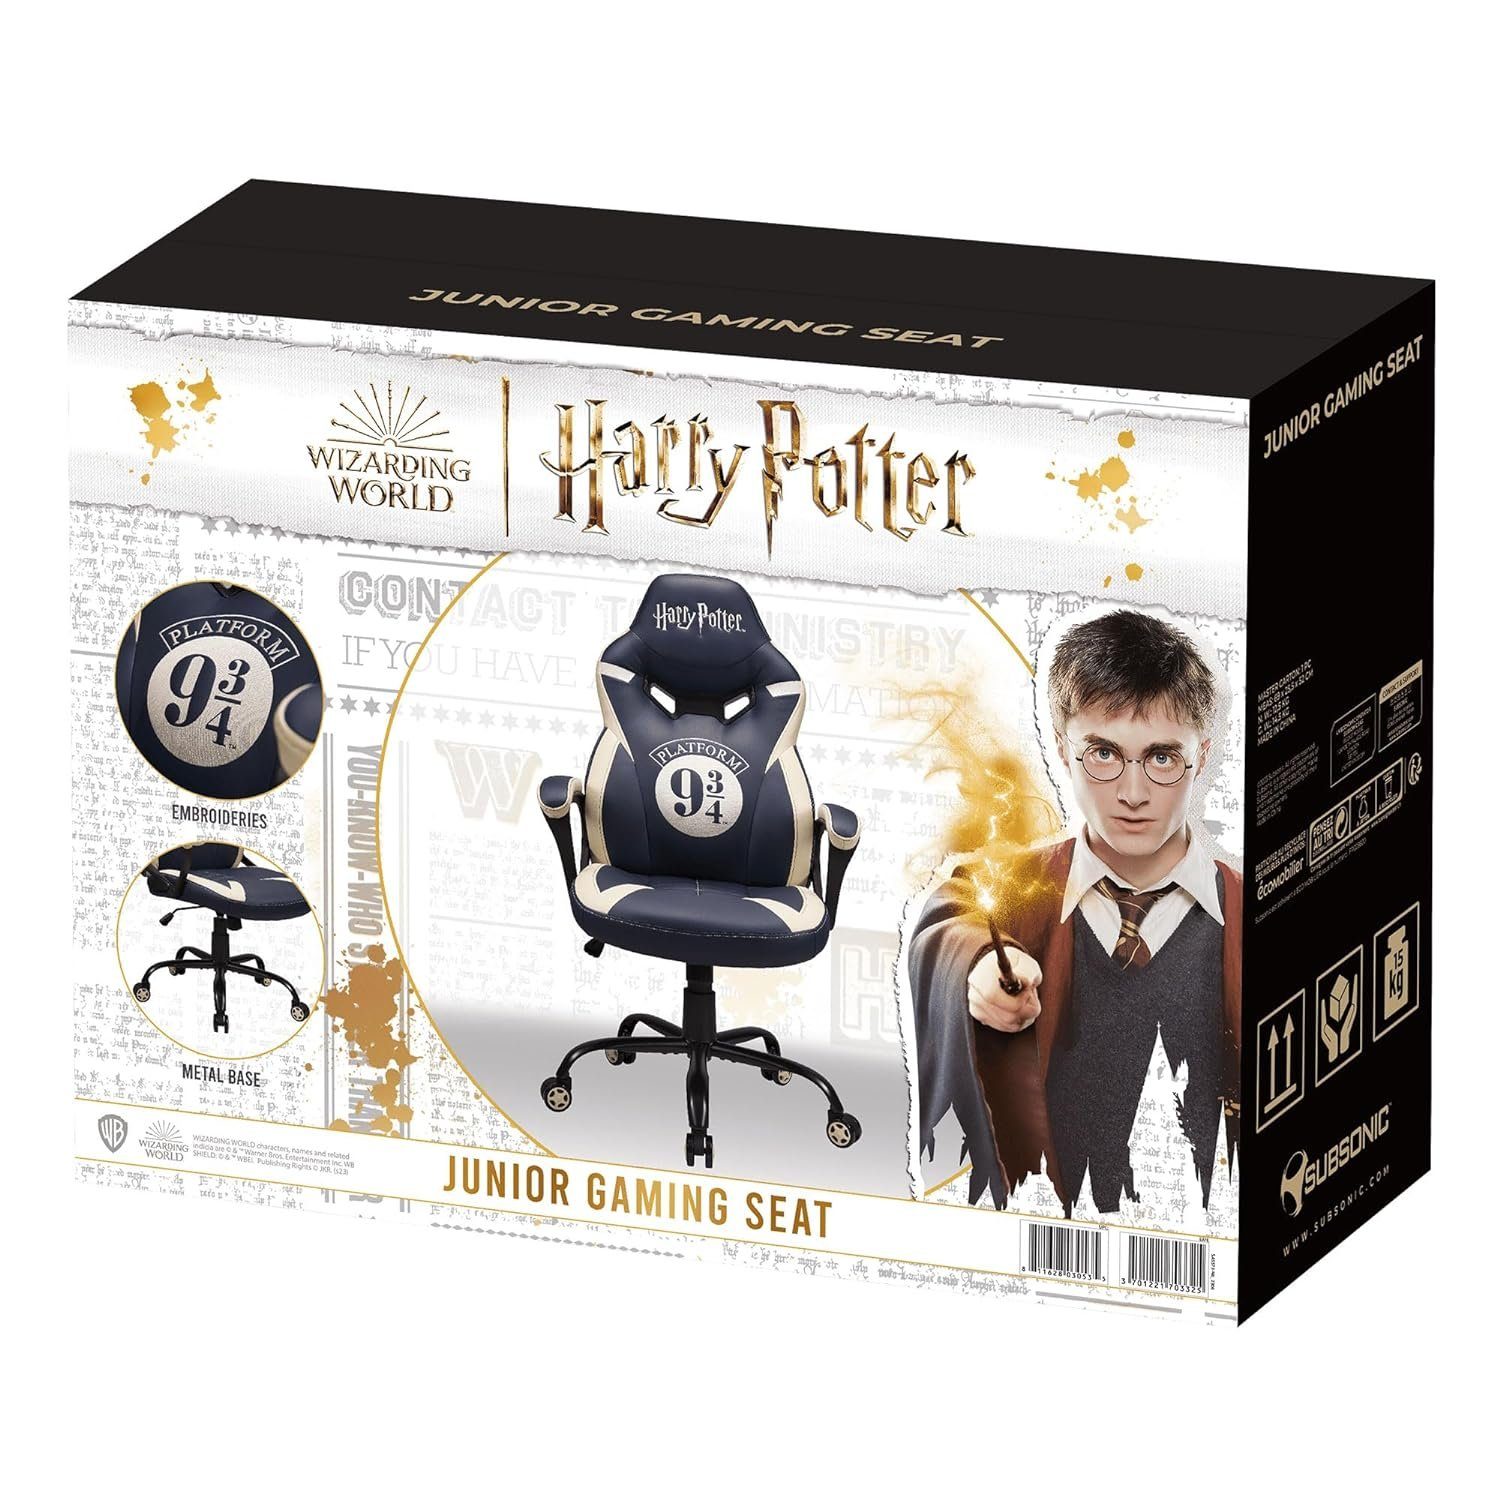 Harry - 3/4 Subsonic / Gaming-Stuhl 9 / (1 St) Potter Gleis Chair Sessel Junior Gaming - Stuhl